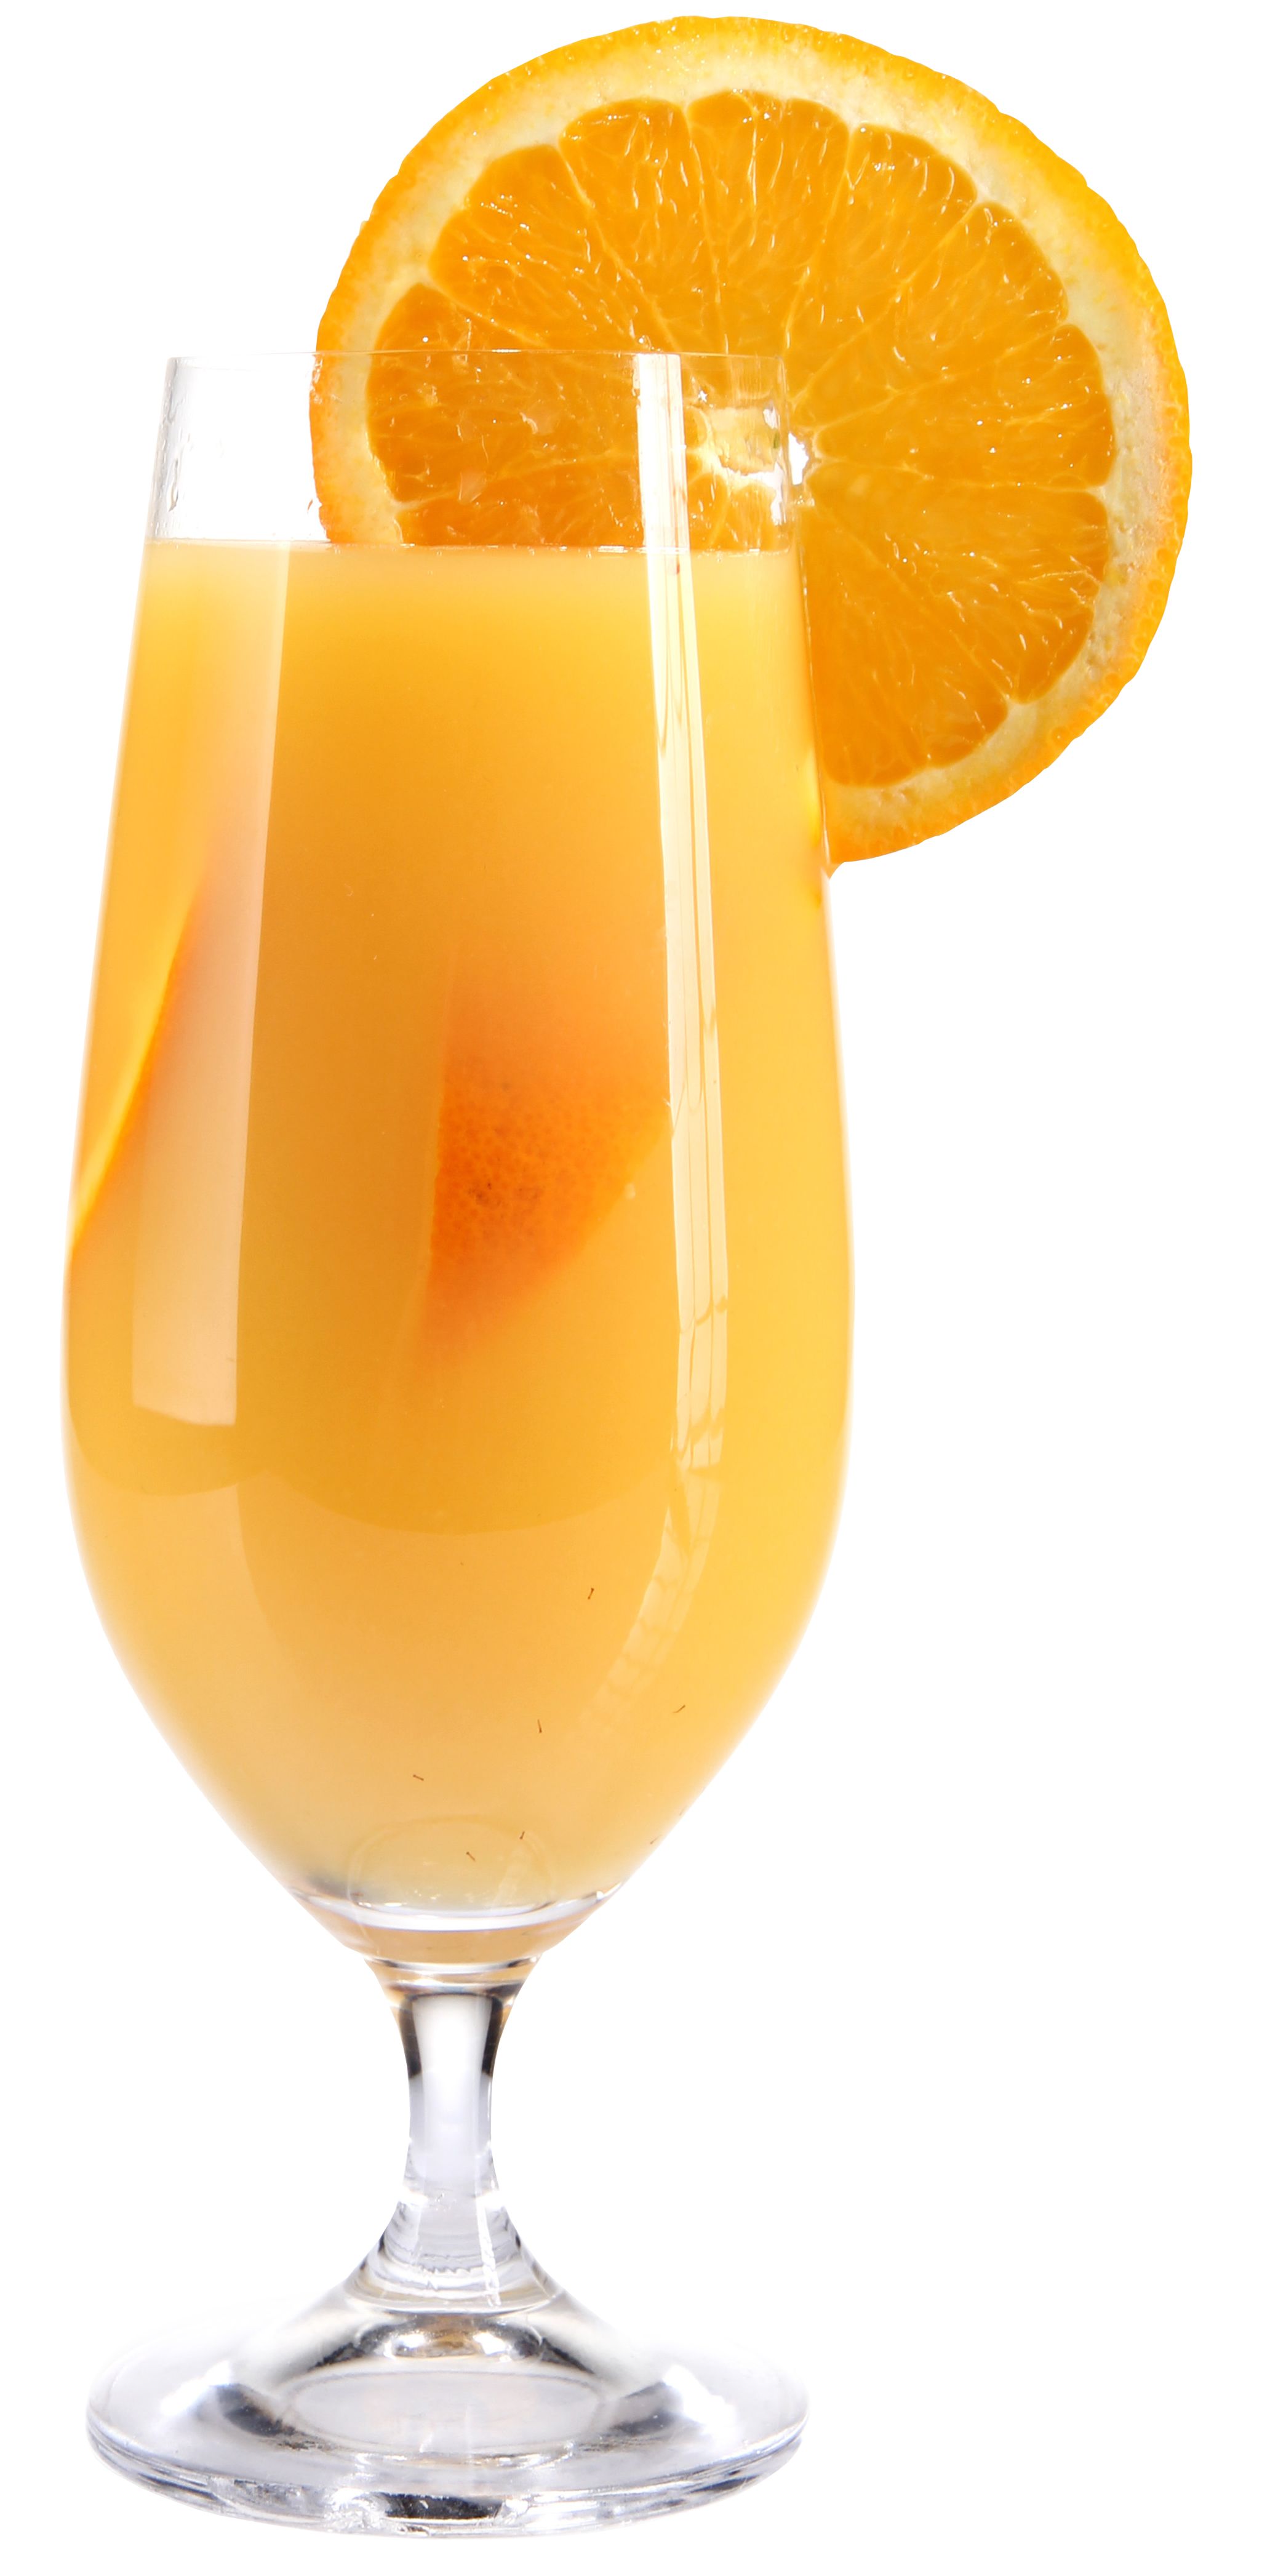 Download wallpaper: orange juice, photo, wallpaper, orange